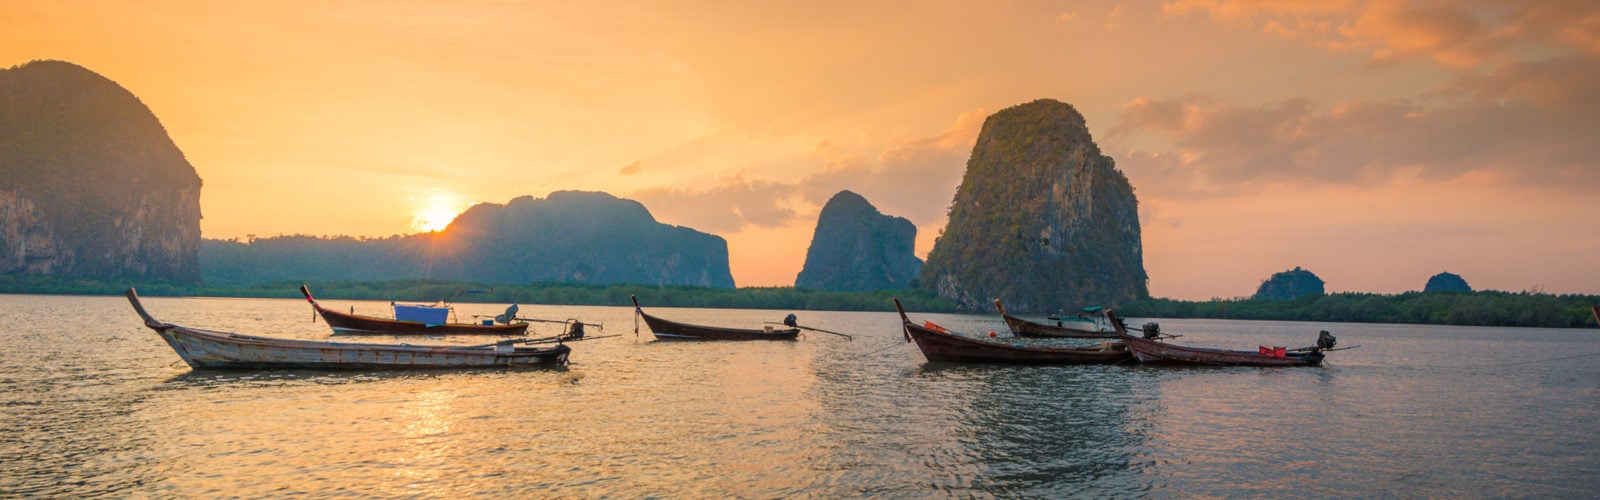 krabi-sunset-thailand